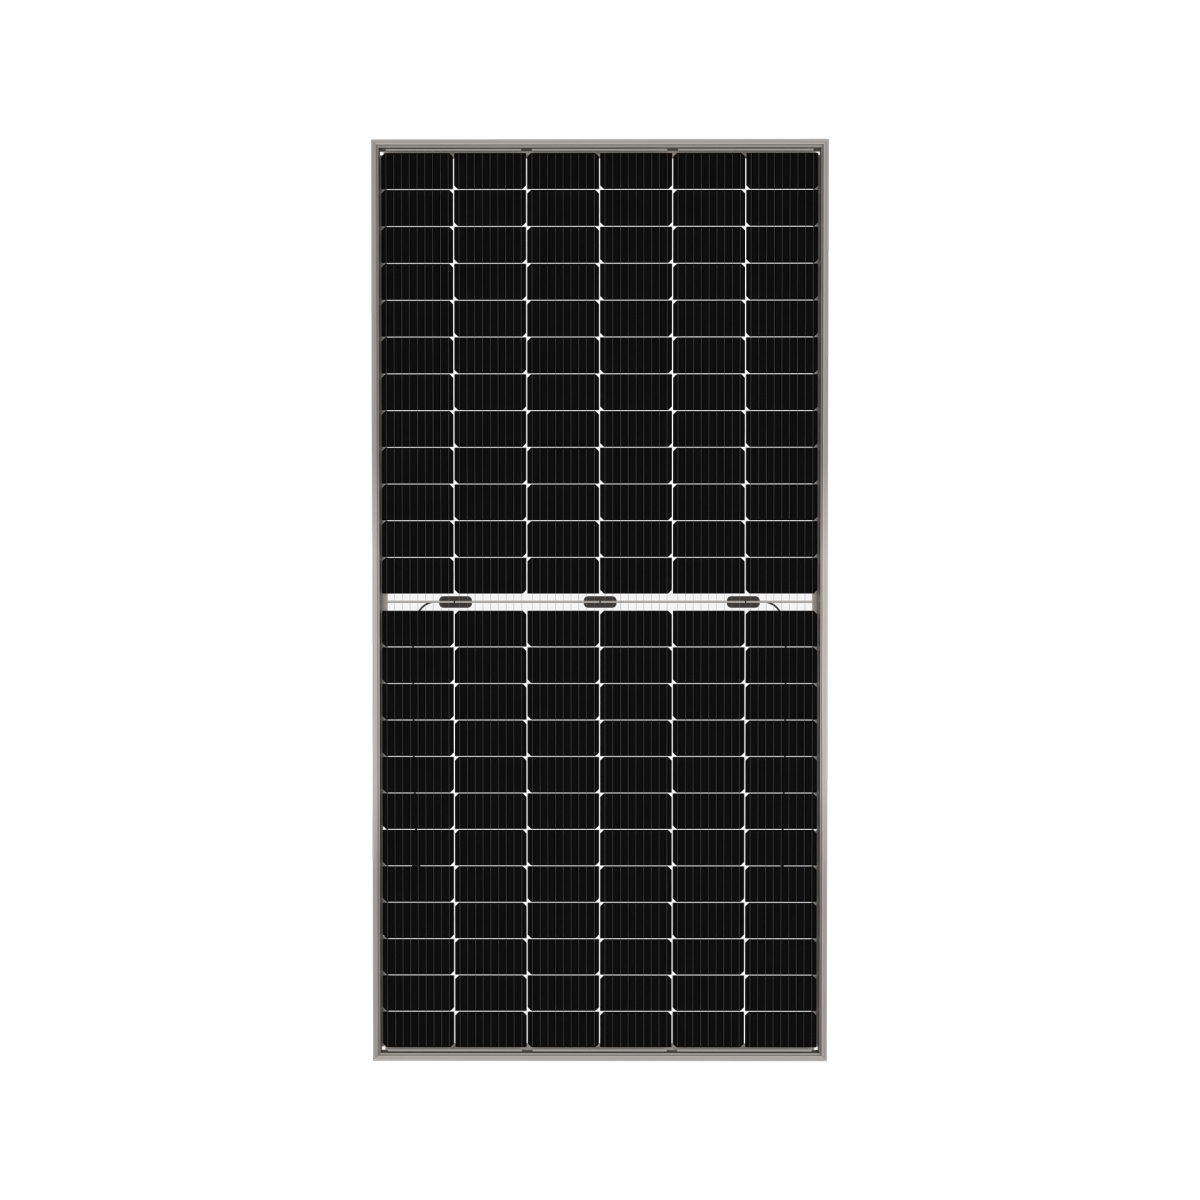 TommaTech 420 Watt 144 Percmono Bifazial Half-Cut Multi Busbar Solarpanel